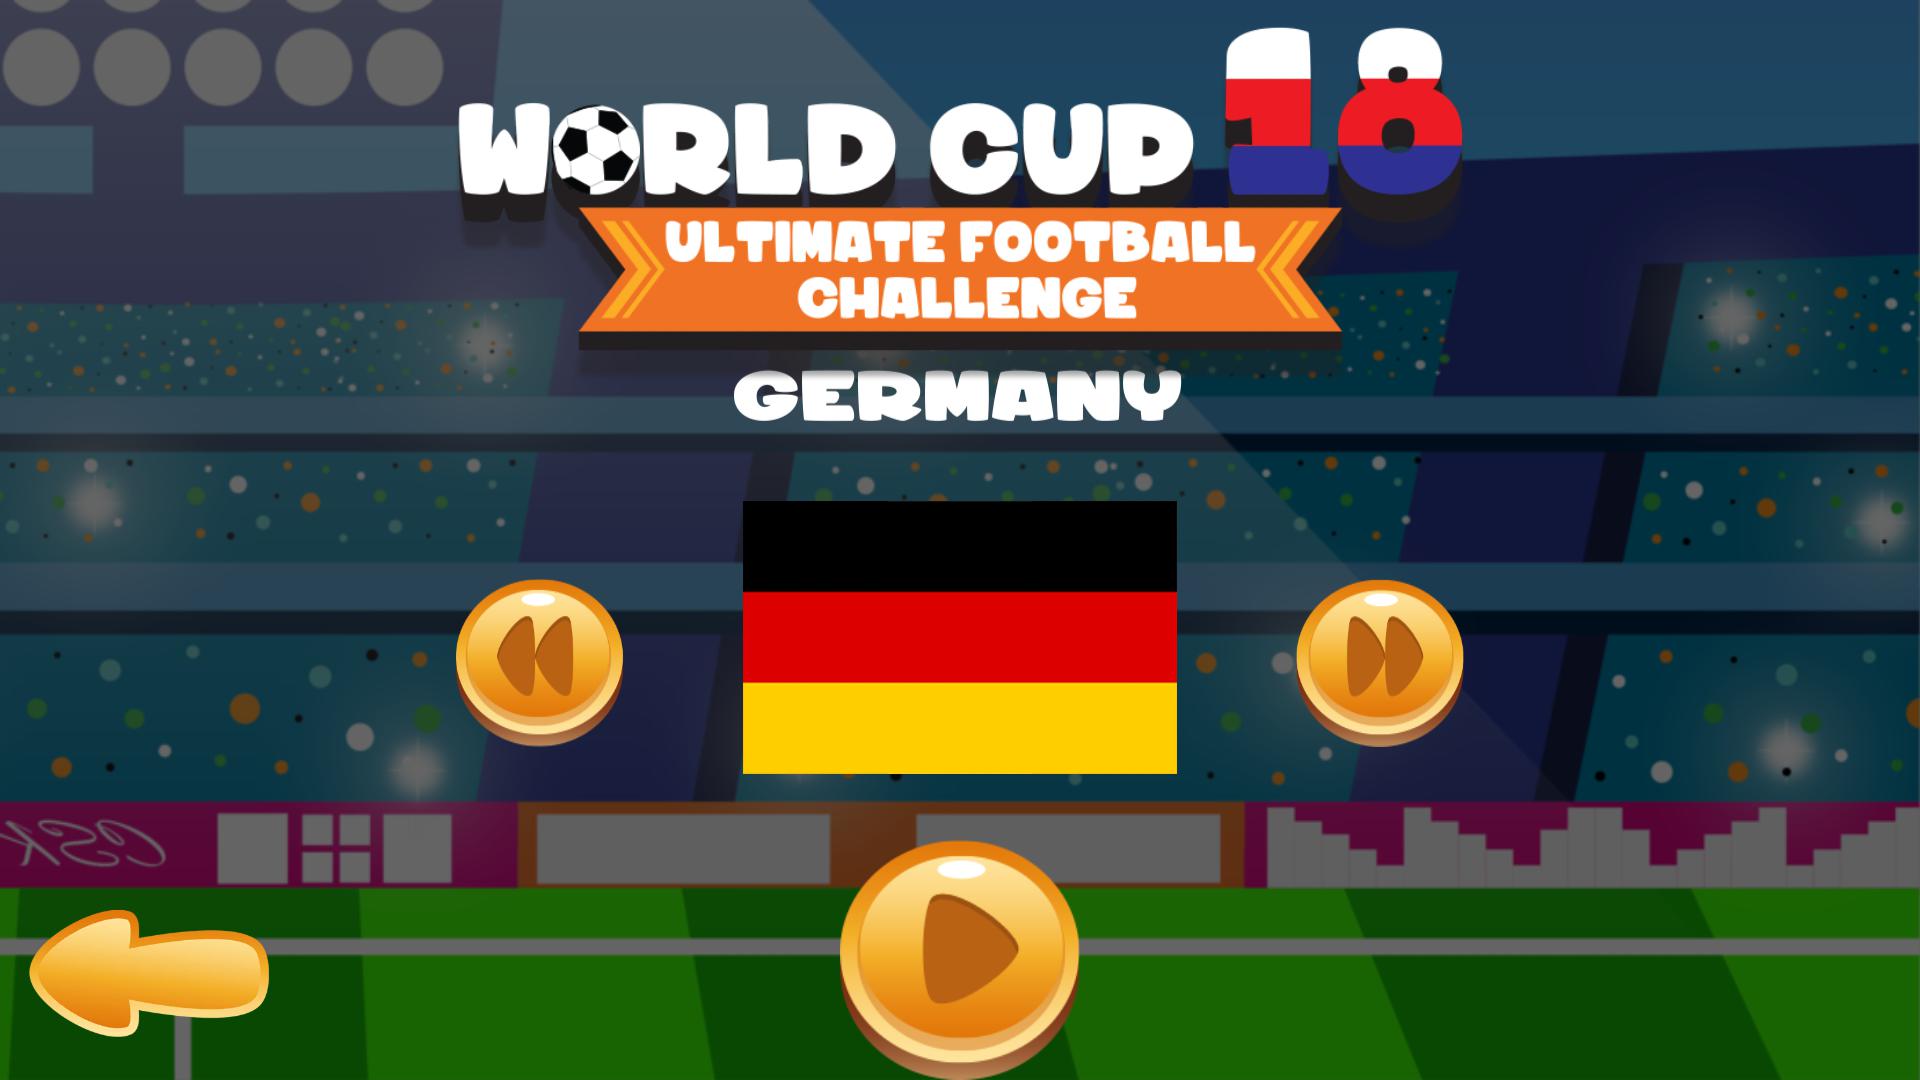 World cup 2018: Ultimate Football Challenge_截图_2